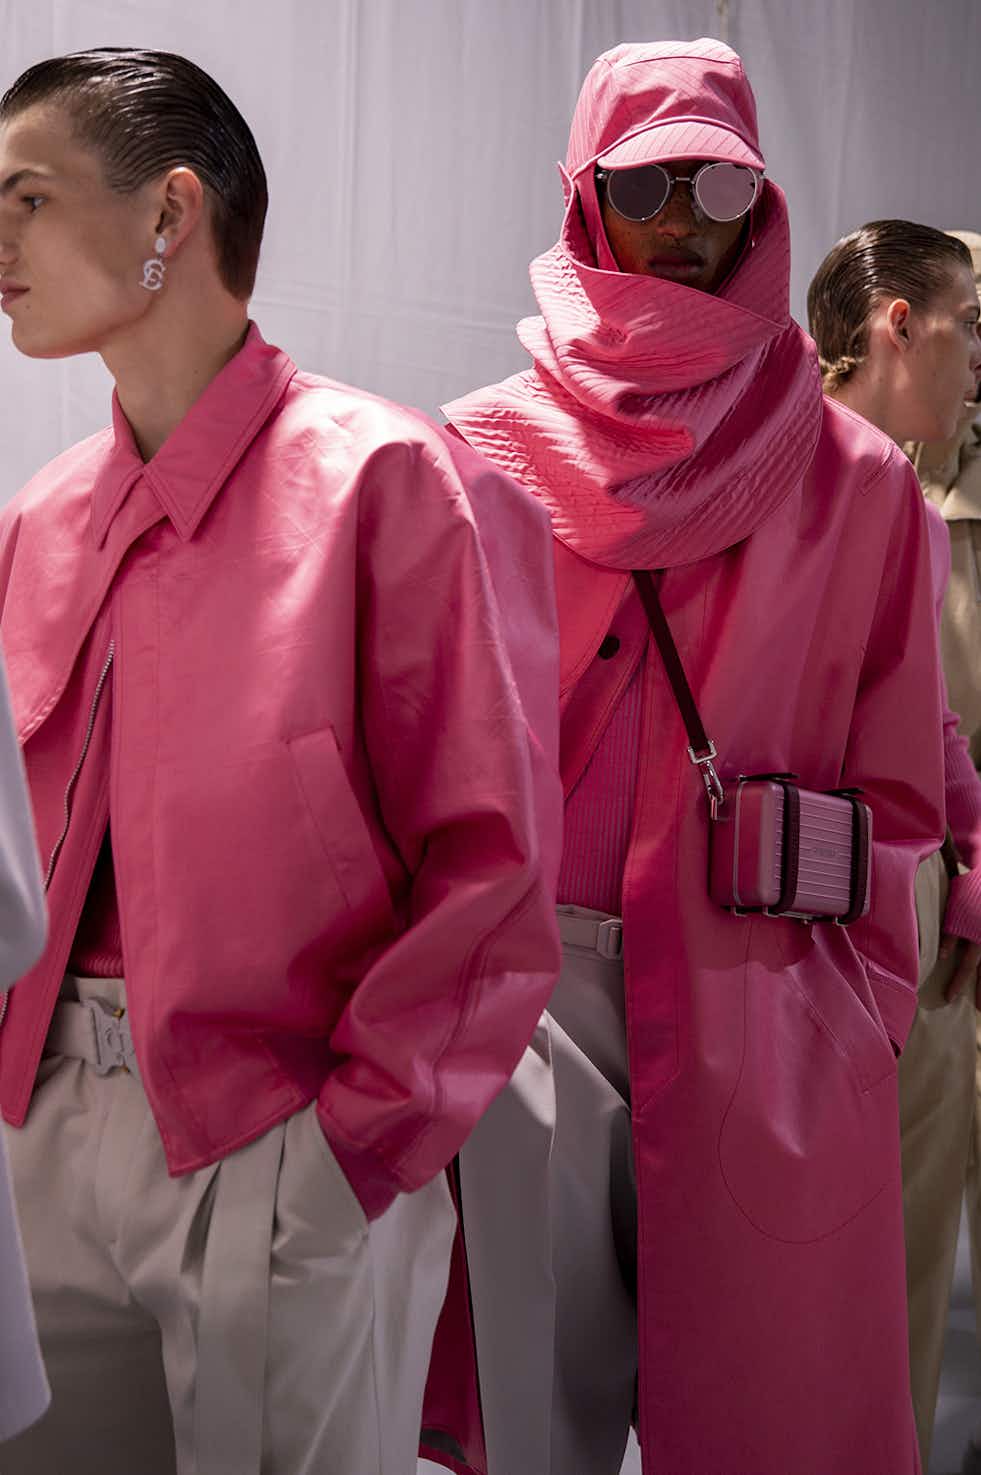 Dior Homme at Paris Fashion Week SS20: Explore Kim Jones